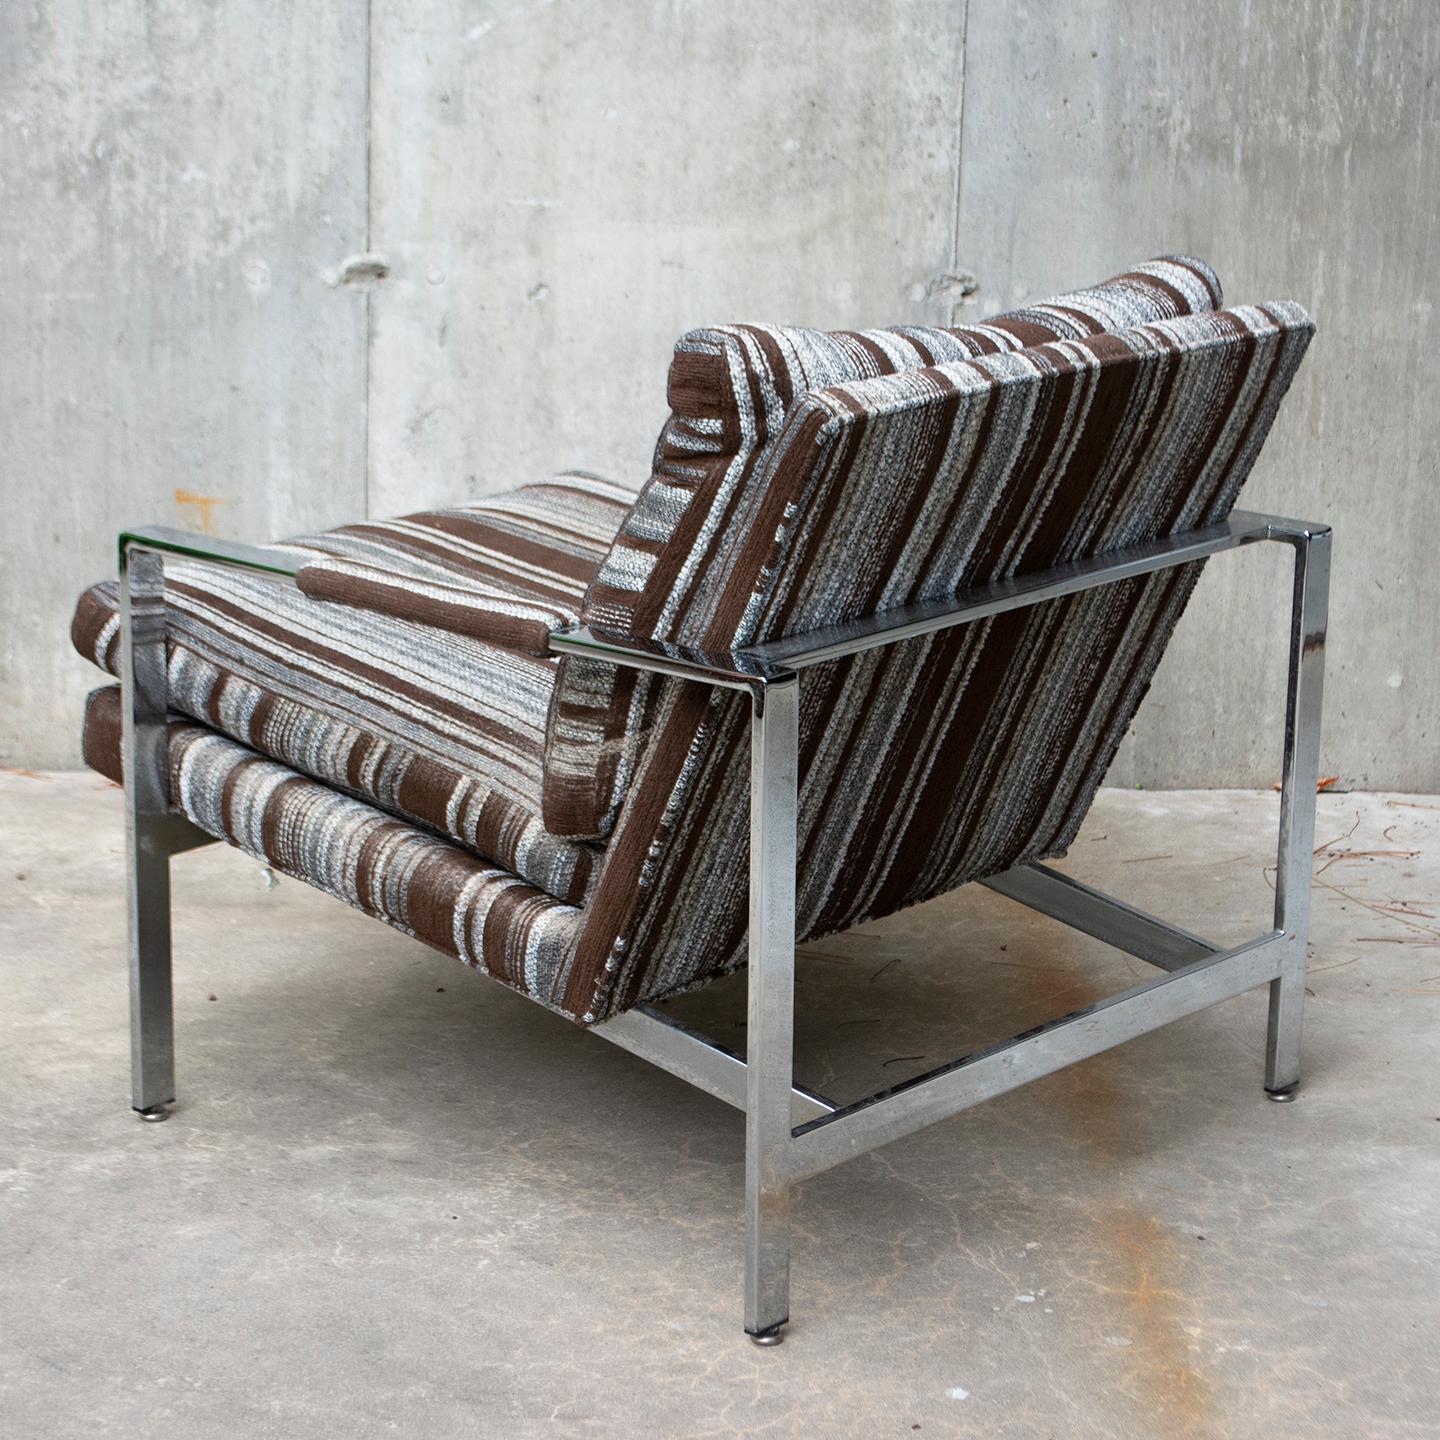 Late 20th Century Mid-Century Modern Milo Baughman for Thayer Coggin Chrome Flat Bar Lounge Chair For Sale